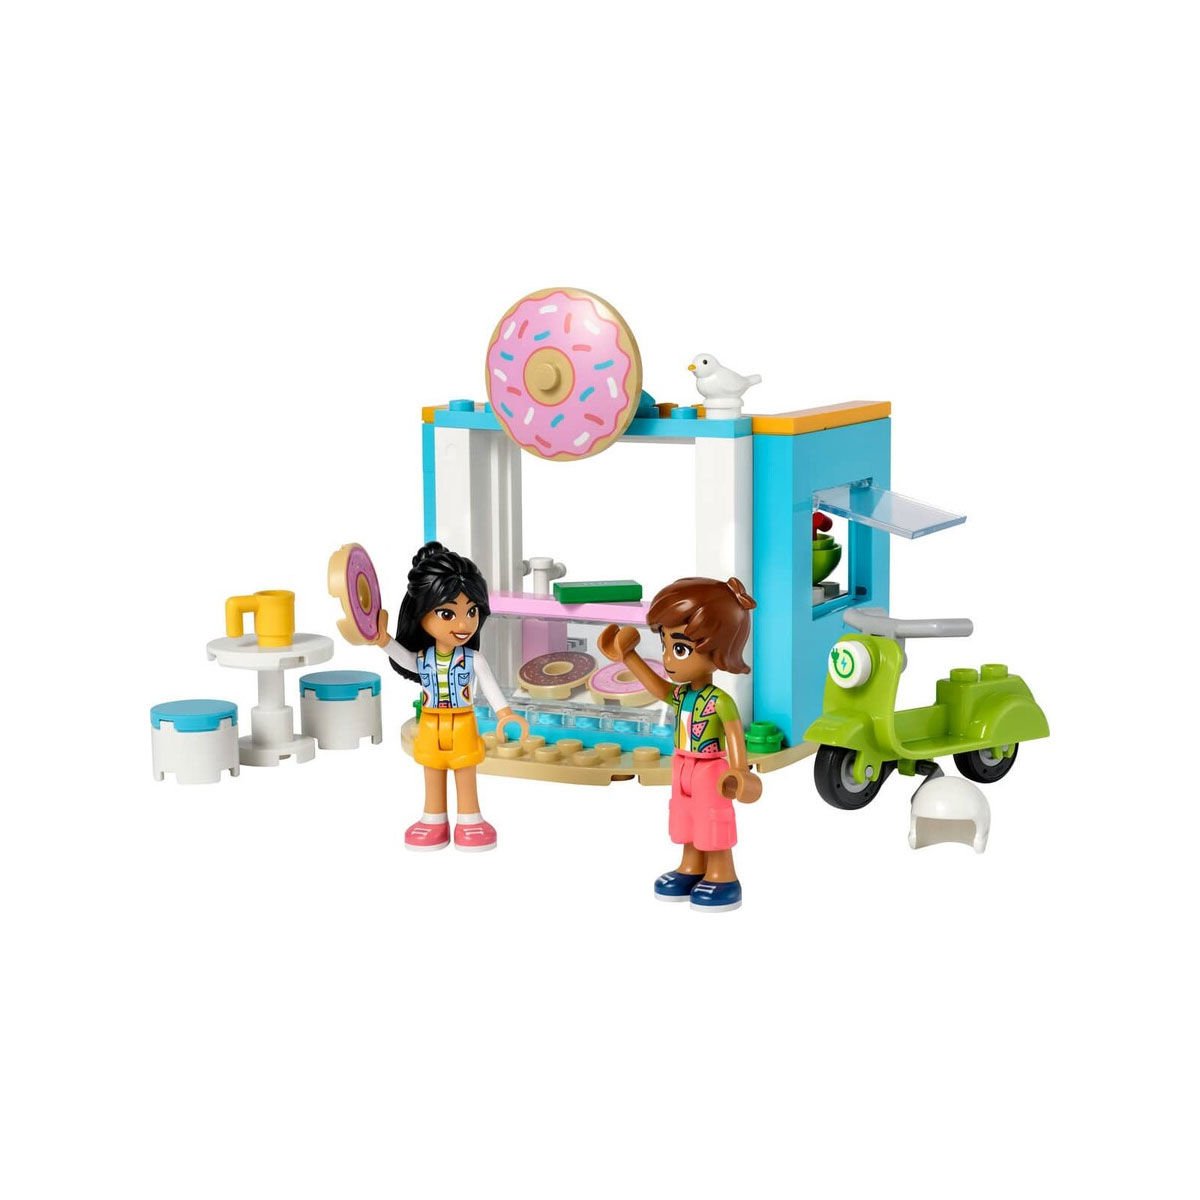 41723 Lego Friends - Donut Dükkanı 63 parça +4 yaş